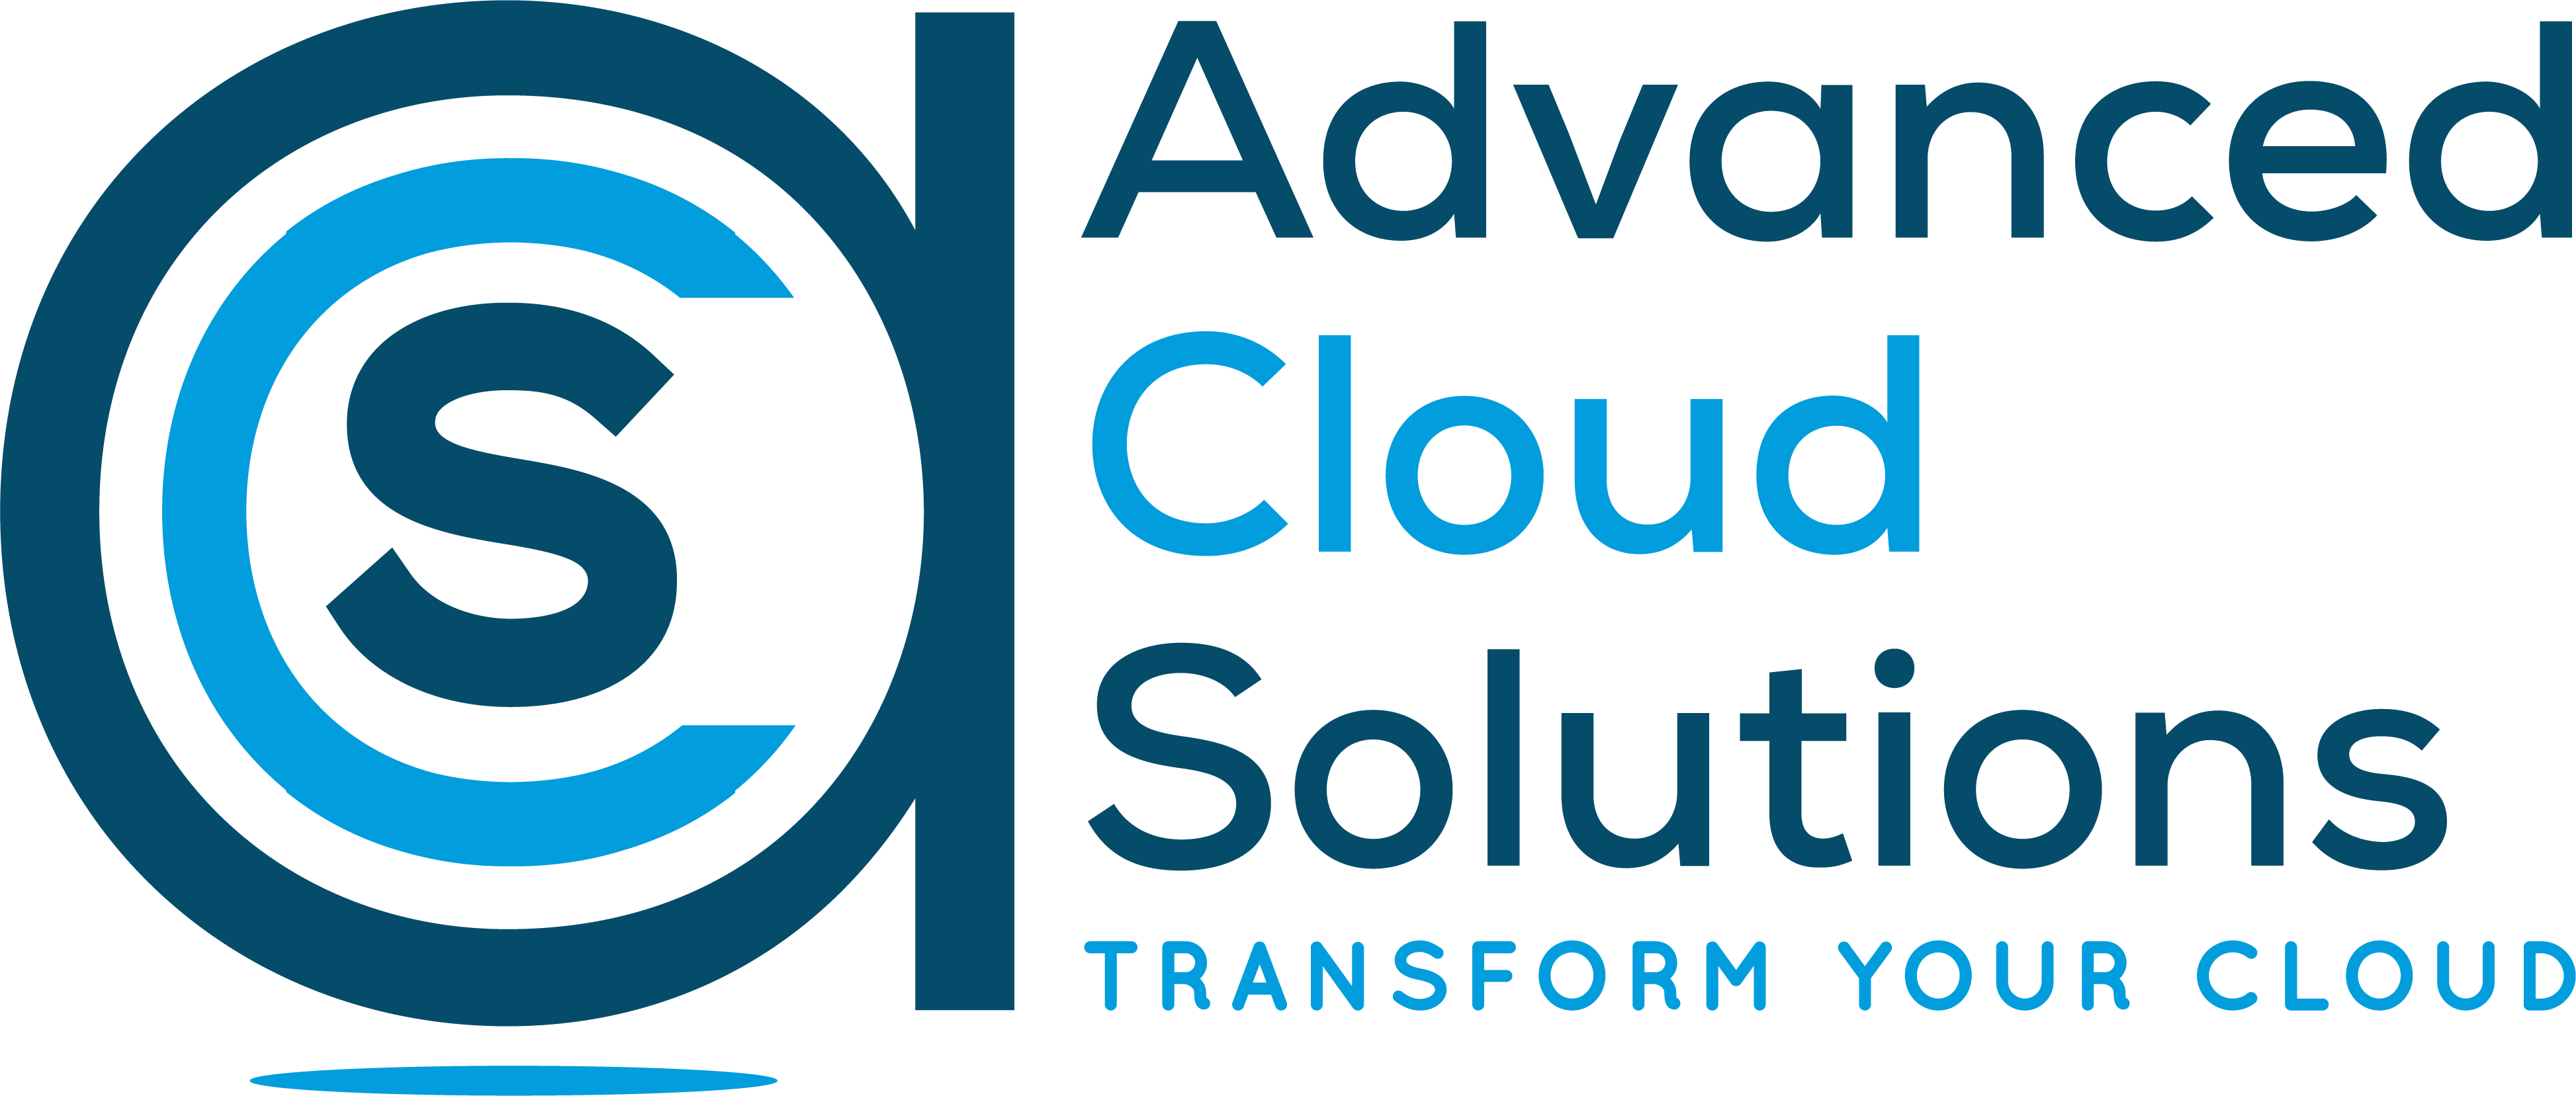 Advanced Cloud Solutions